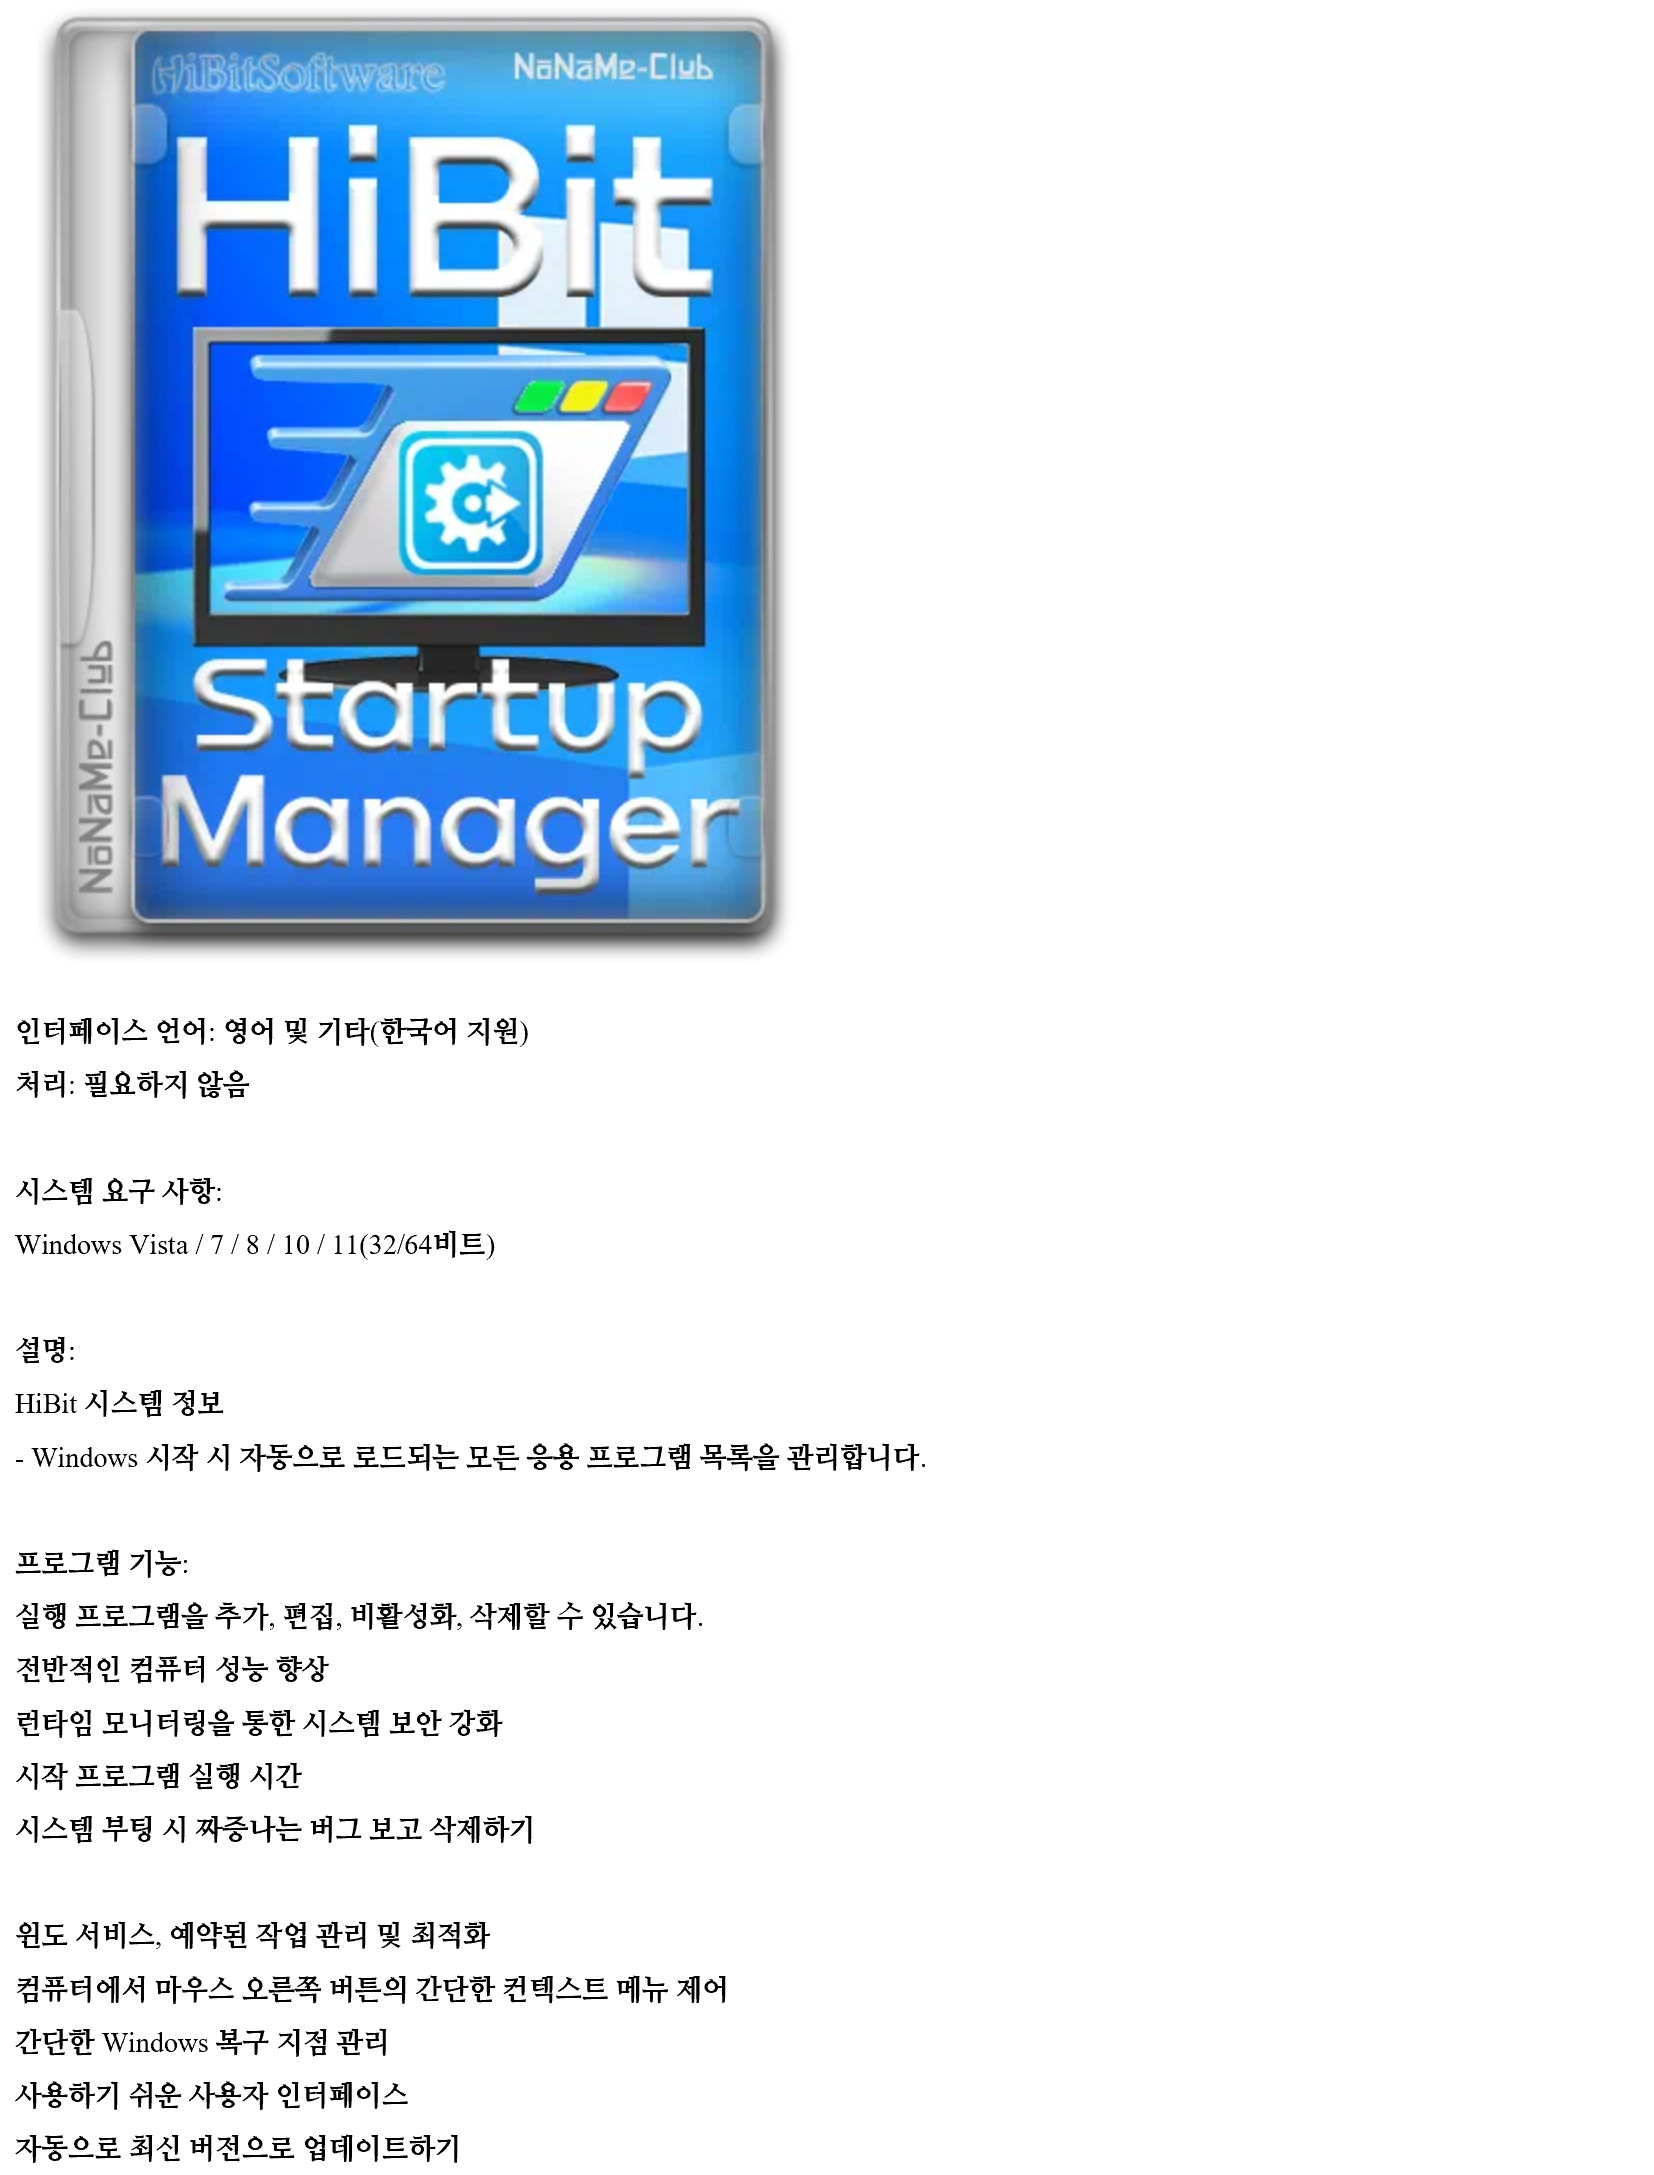 instaling HiBit Startup Manager 2.6.20